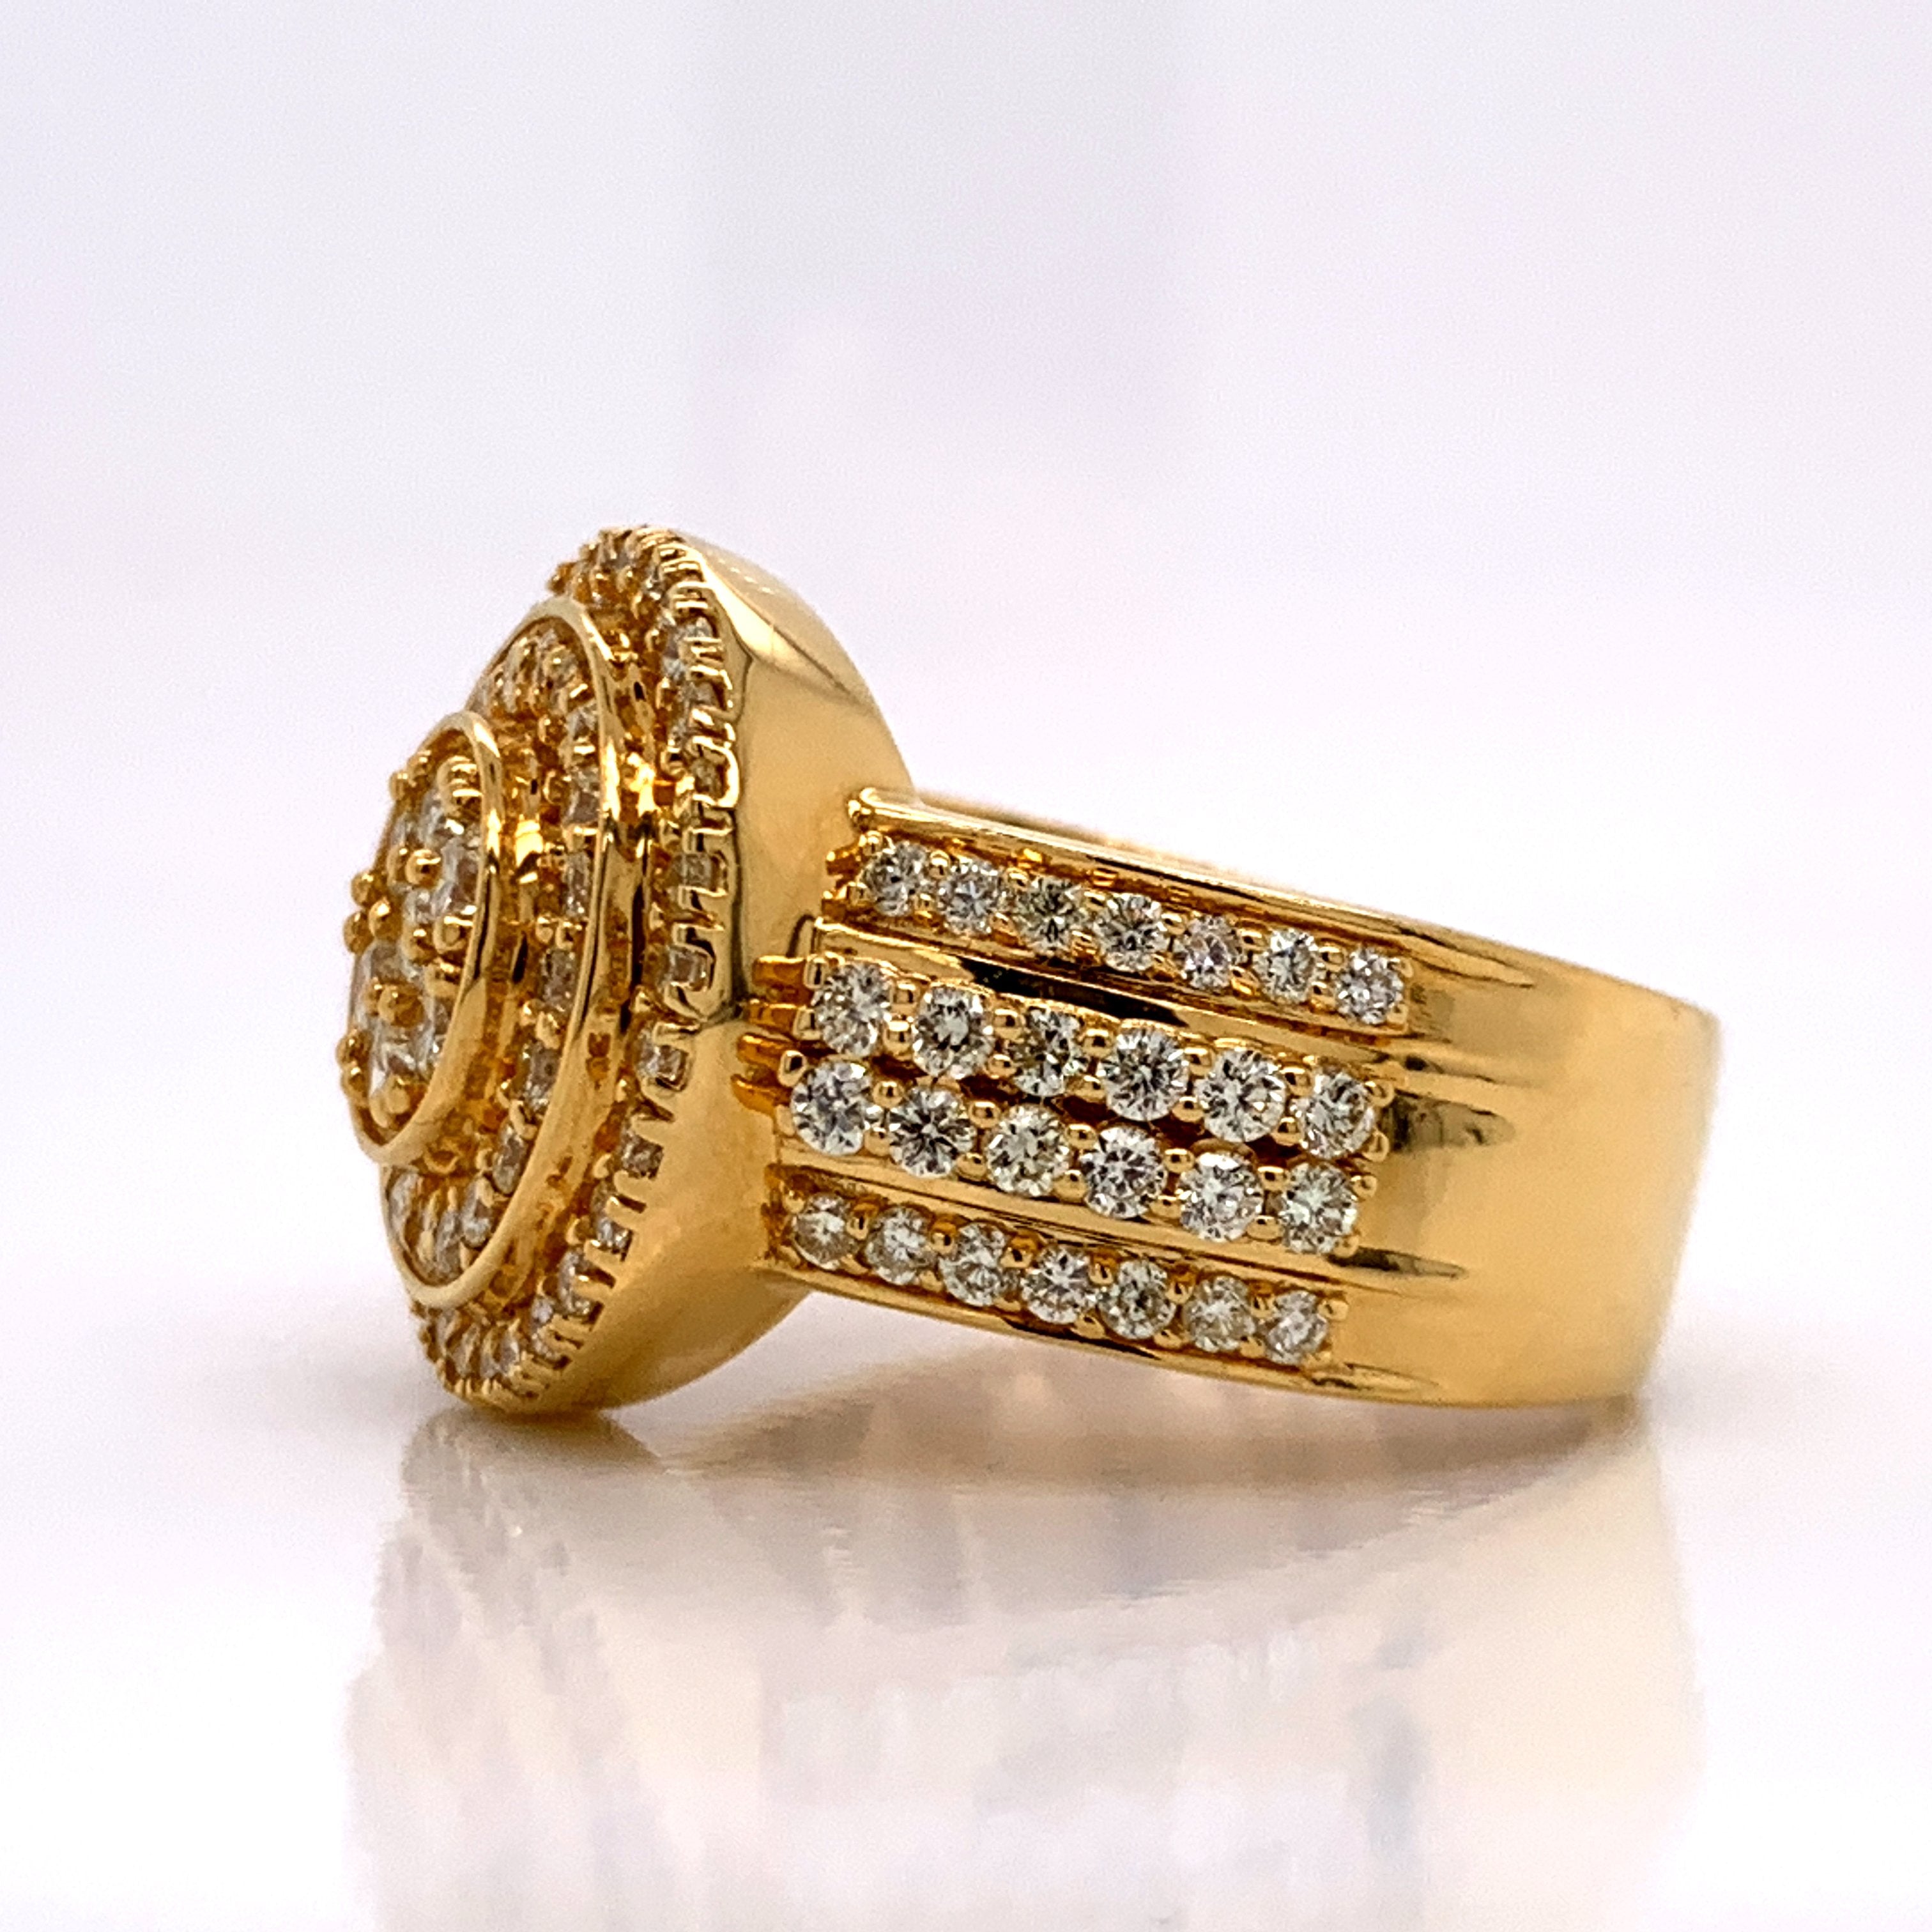 2.11CT Diamond 10K Gold Ring - White Carat Diamonds 